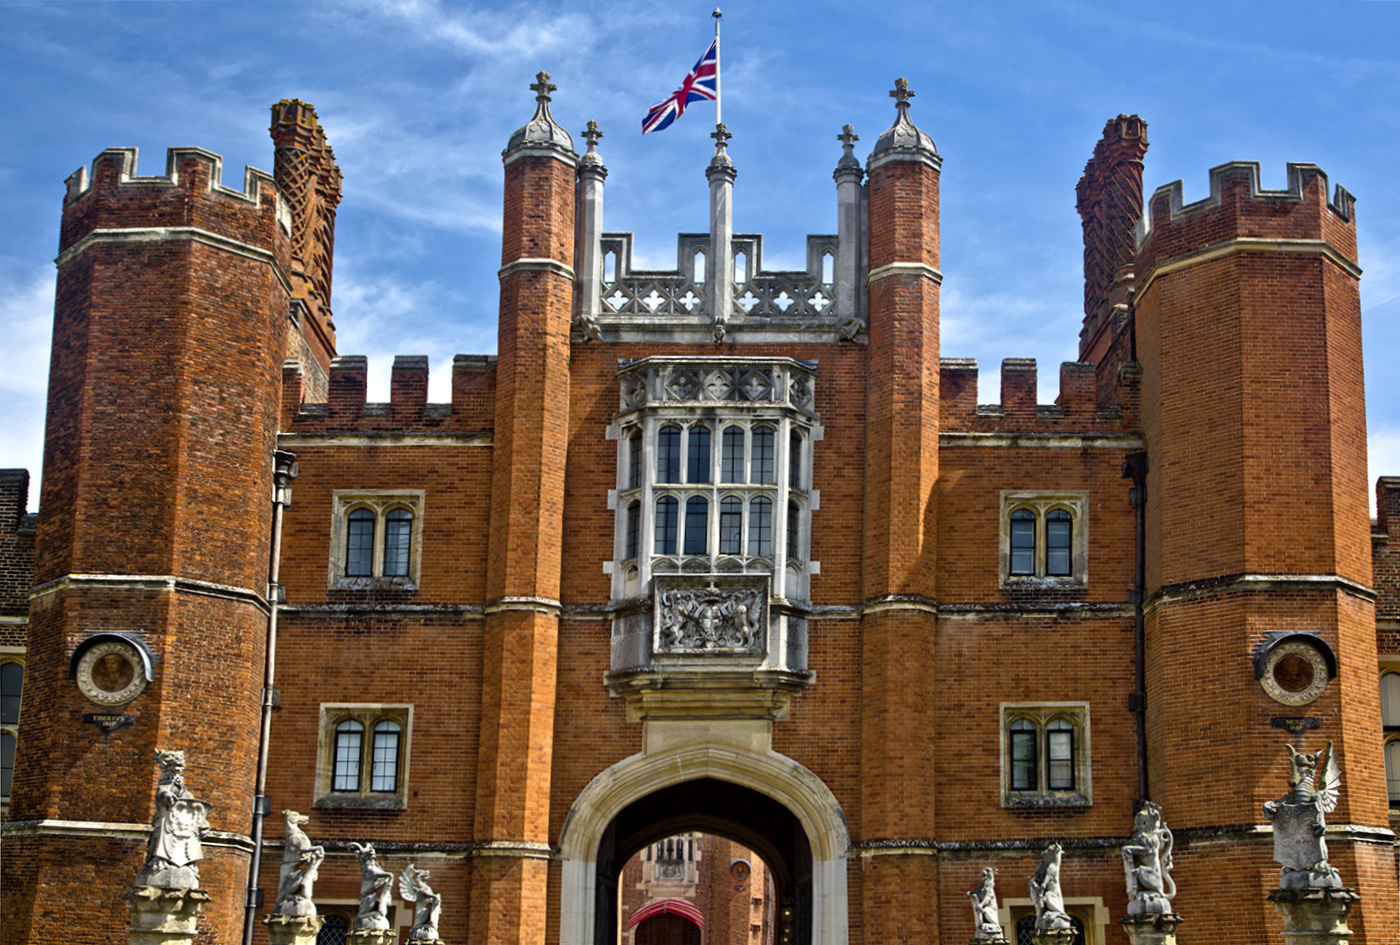 Tudor Great Gatehouse by David Stout